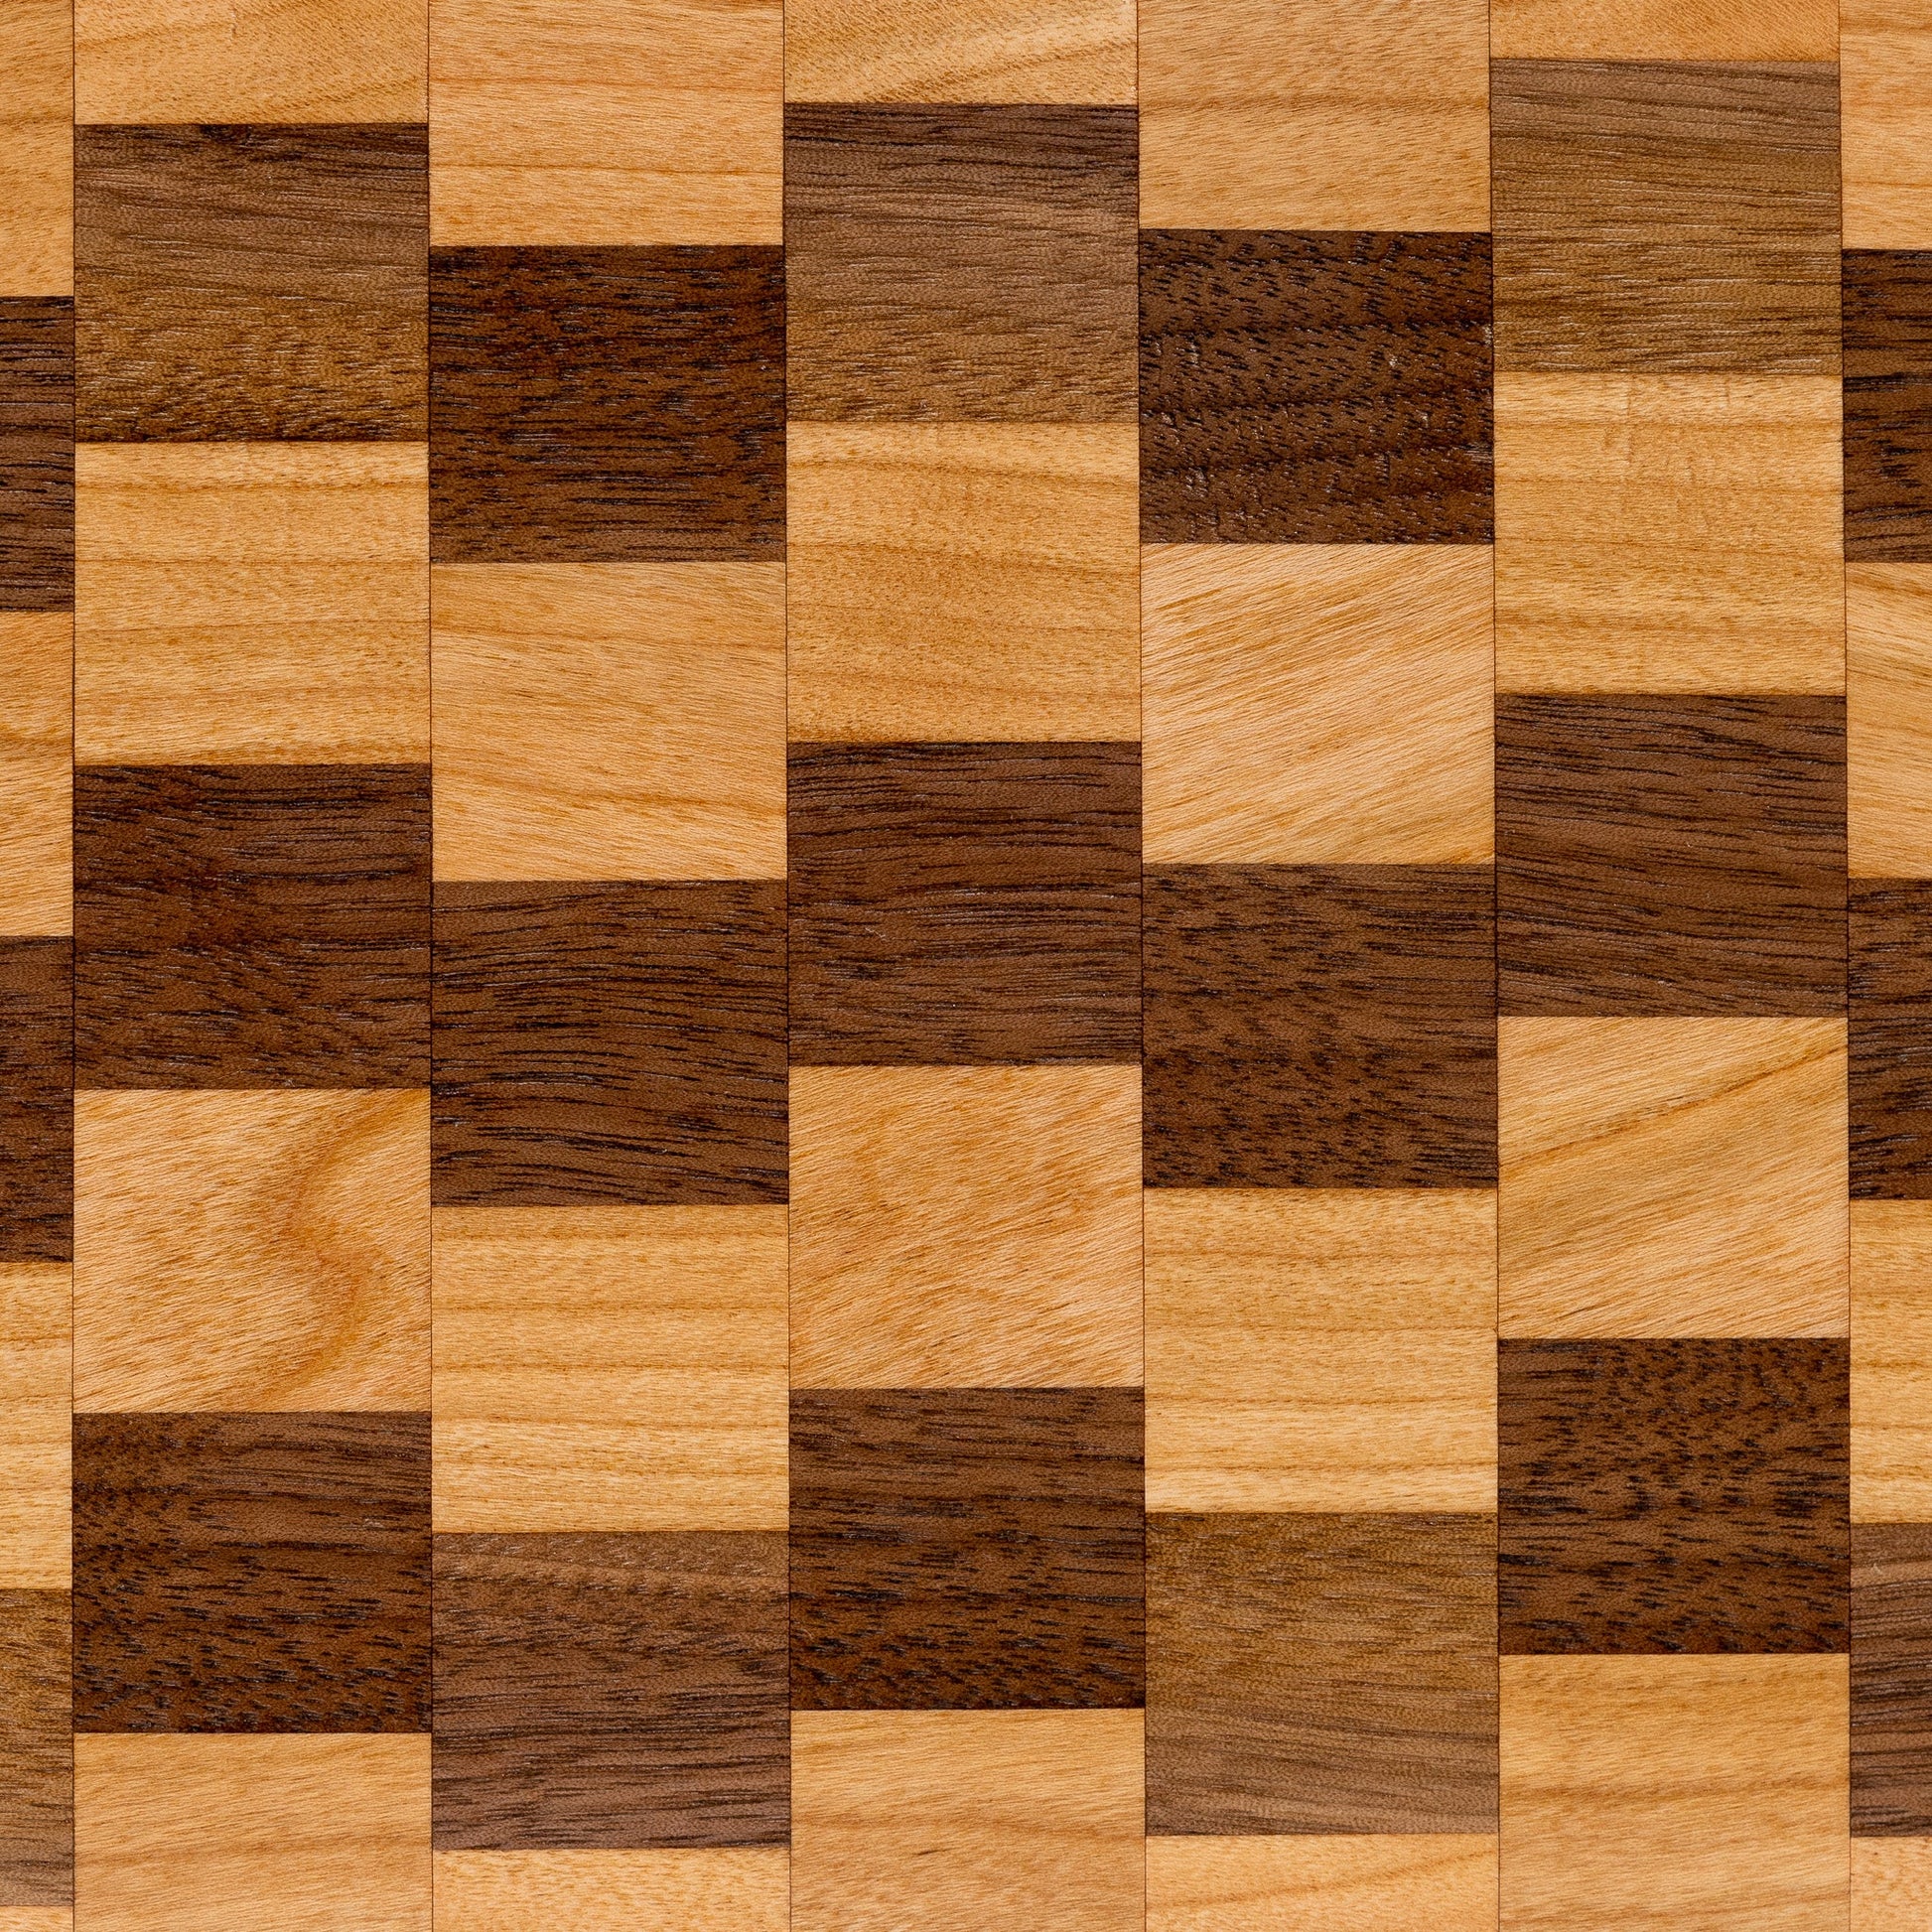 handmade walnut and cherry wood illusion cutting board